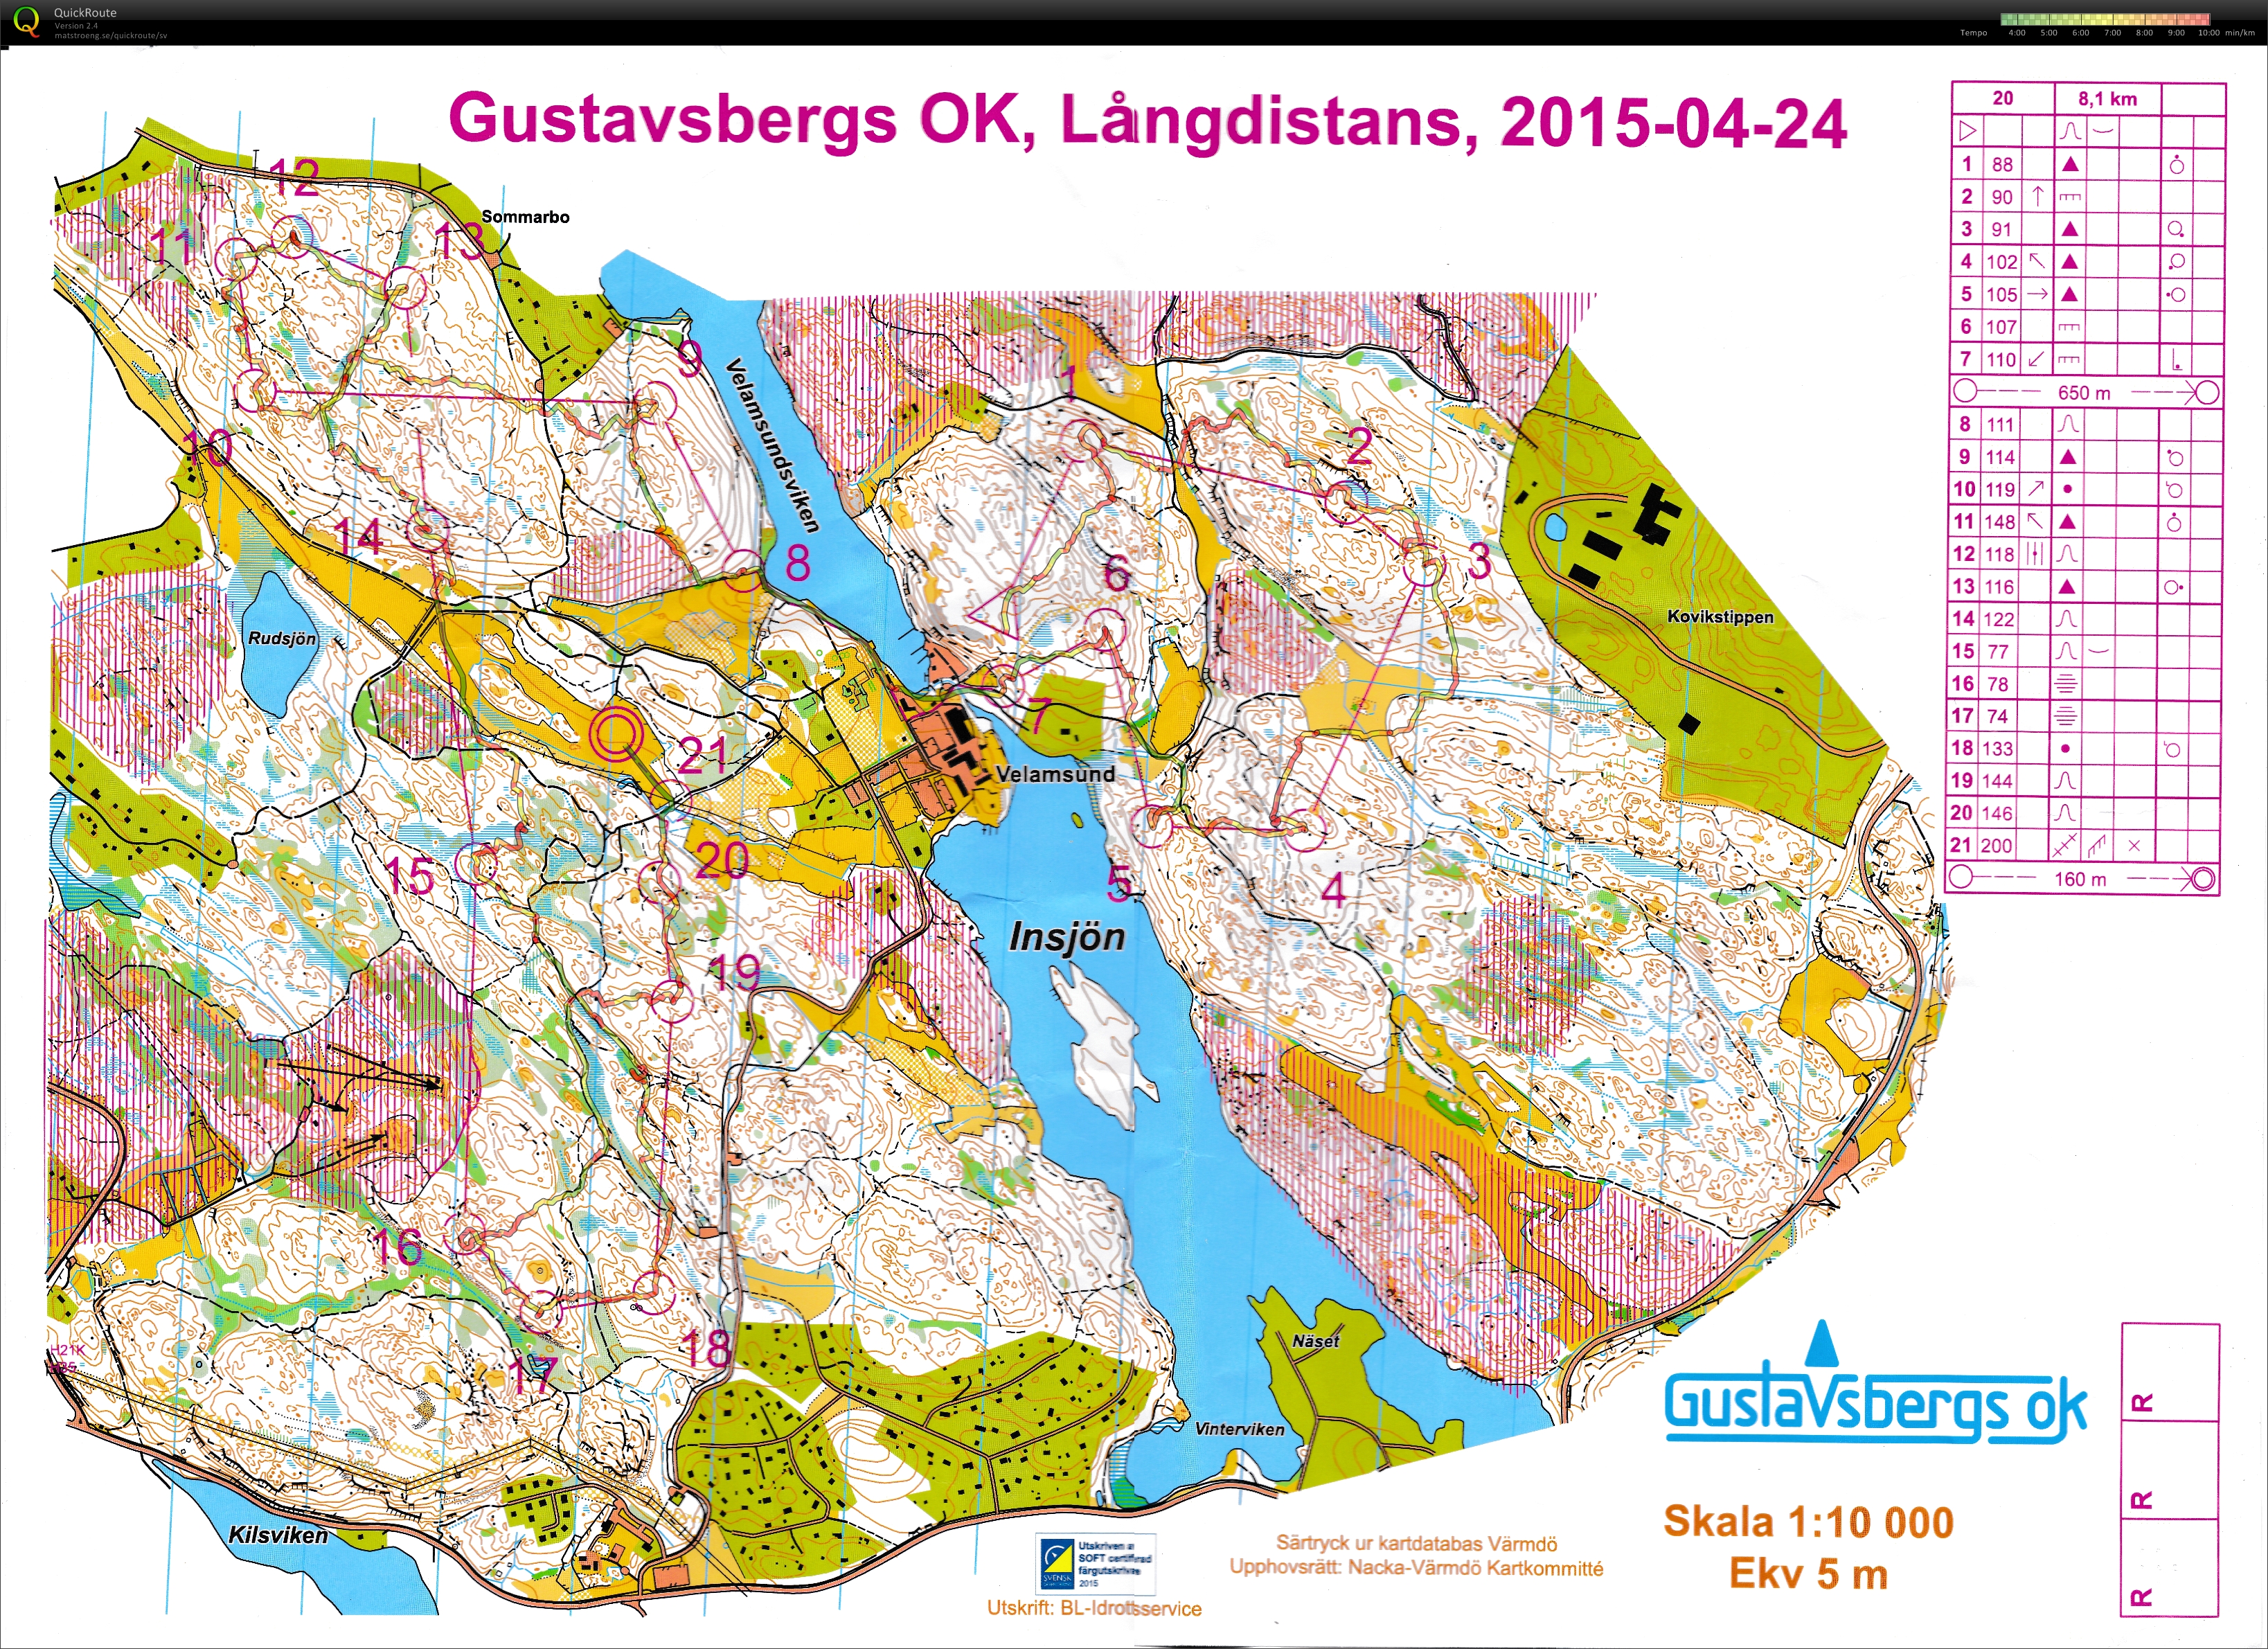 Gustavsbergs OK, Långdistans (25/04/2015)